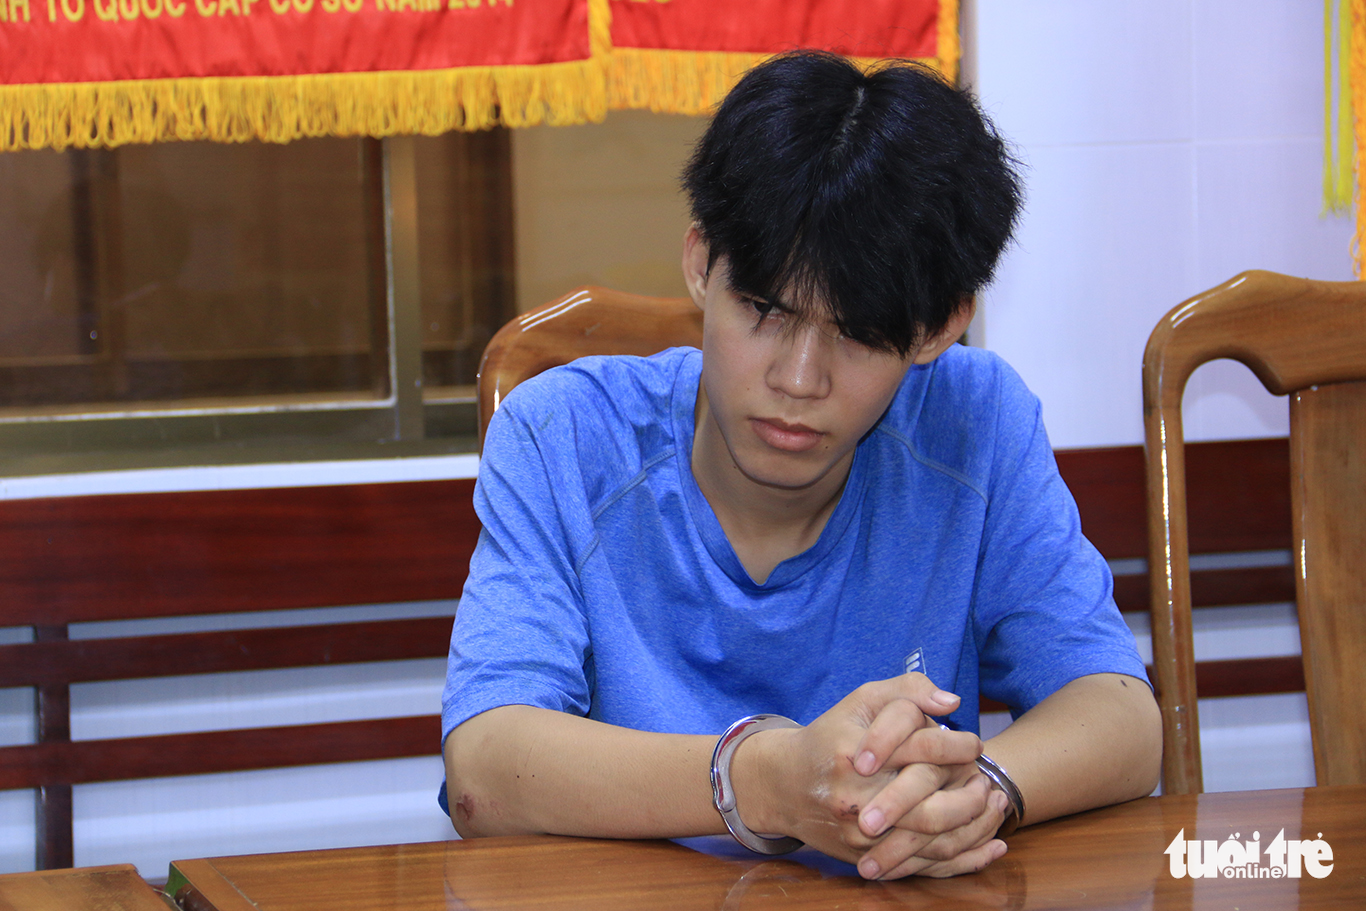 Teenage game addict murders, robs friend in Vietnam’s Mekong Delta